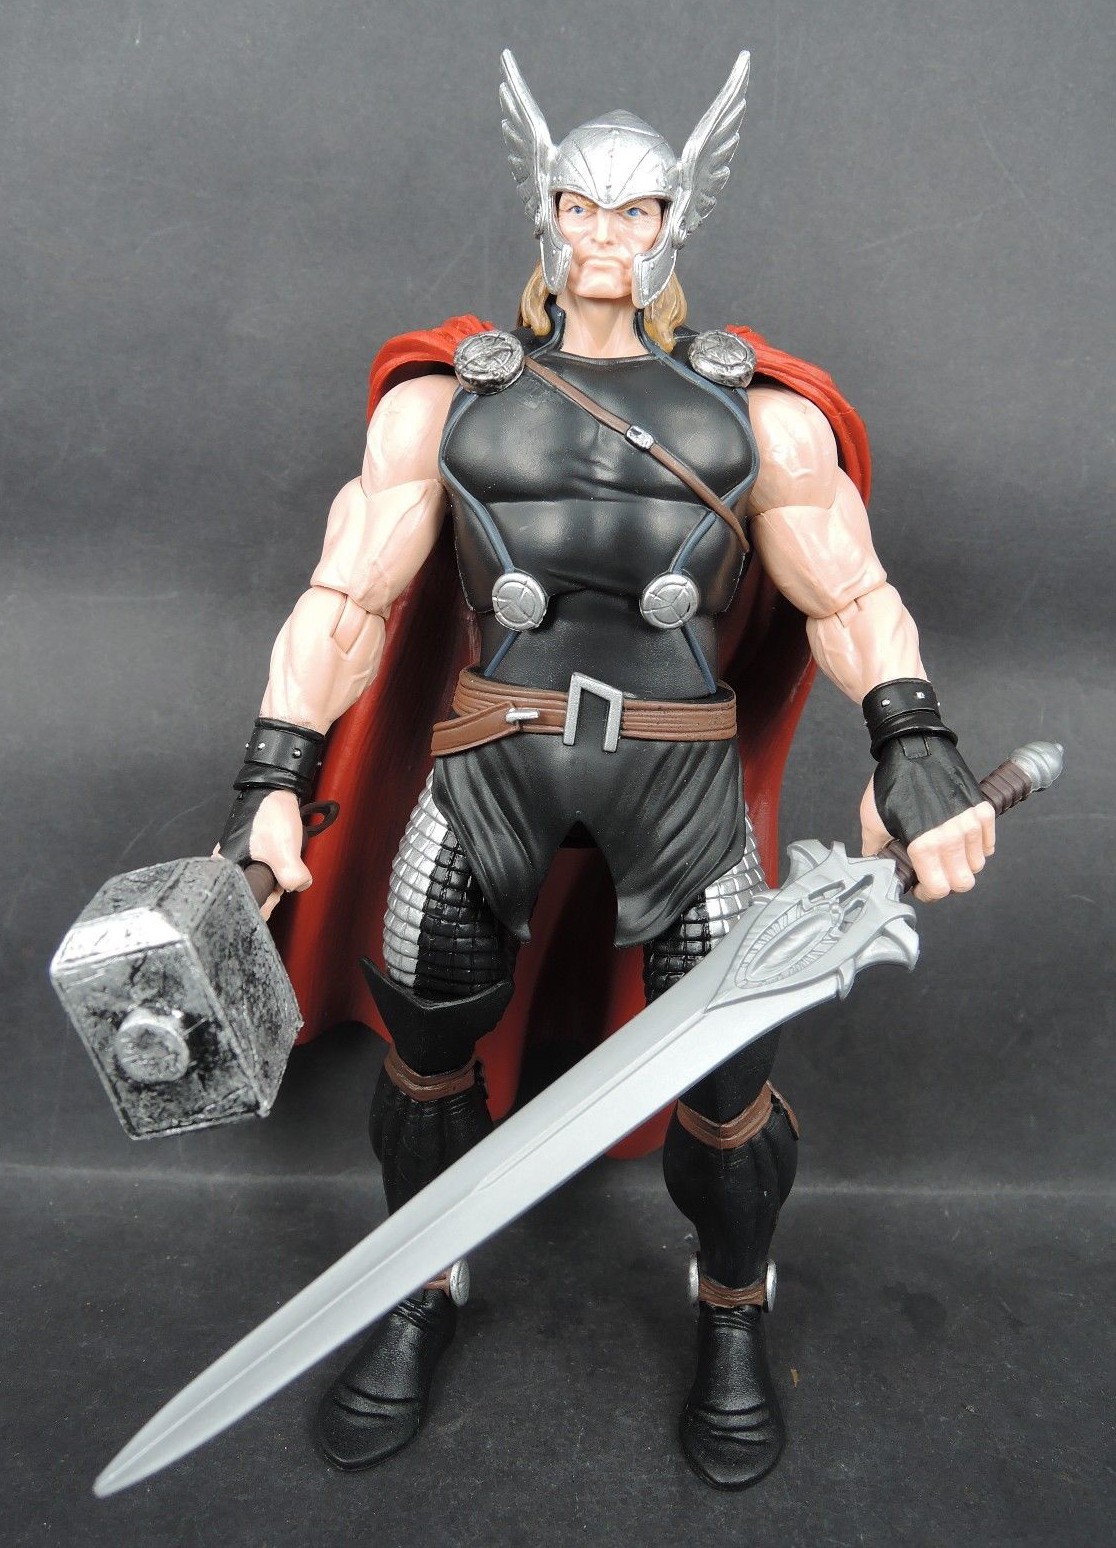 http://marveltoynews.com/wp-content/uploads/2014/12/Marvel-Legends-2015-Thor-Heroic-Age-Action-Figure-e1418184465933.jpg